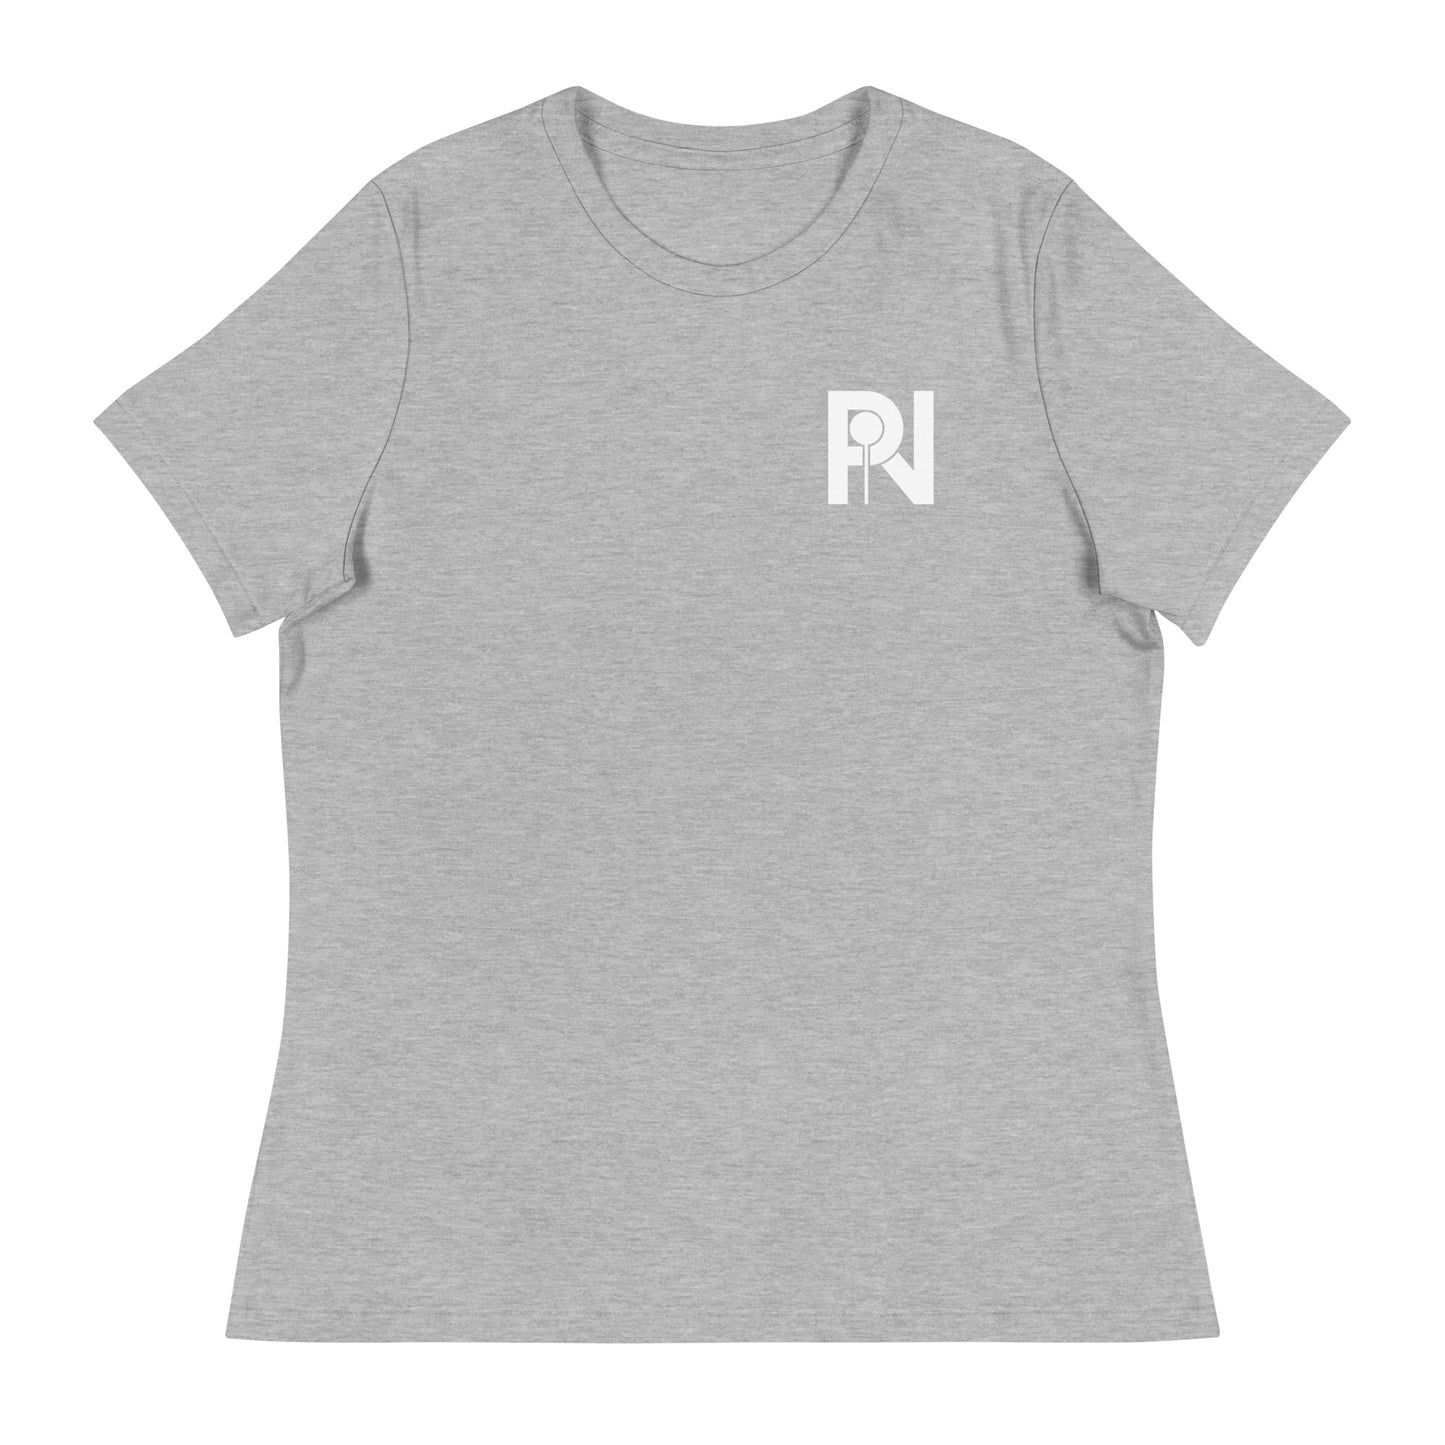 Women's simple logo relaxed t-shirt